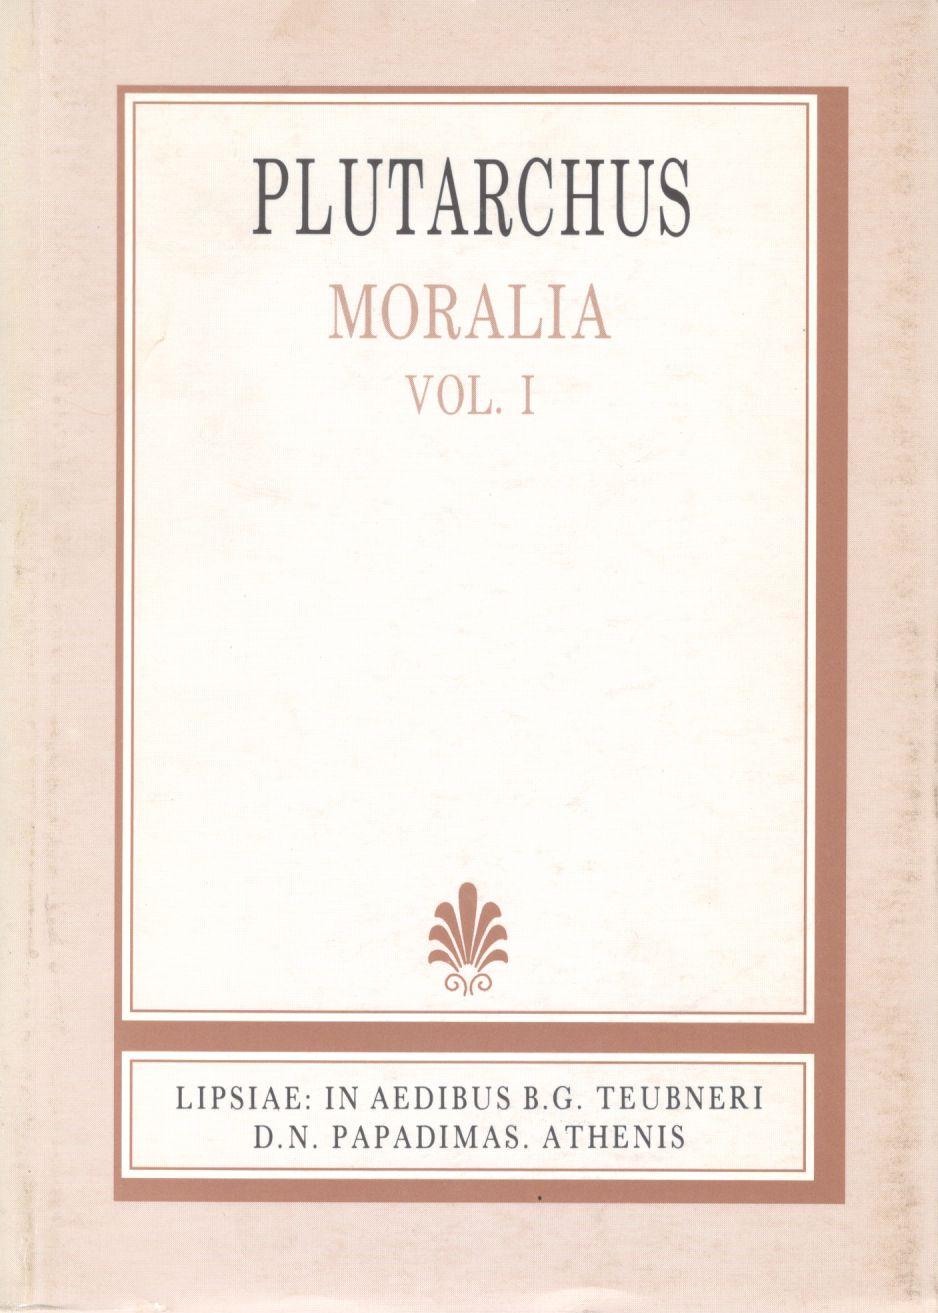 Plutarchi Moralia, Vol. I, [Πλουτάρχου, Ηθικά, τ. Α']